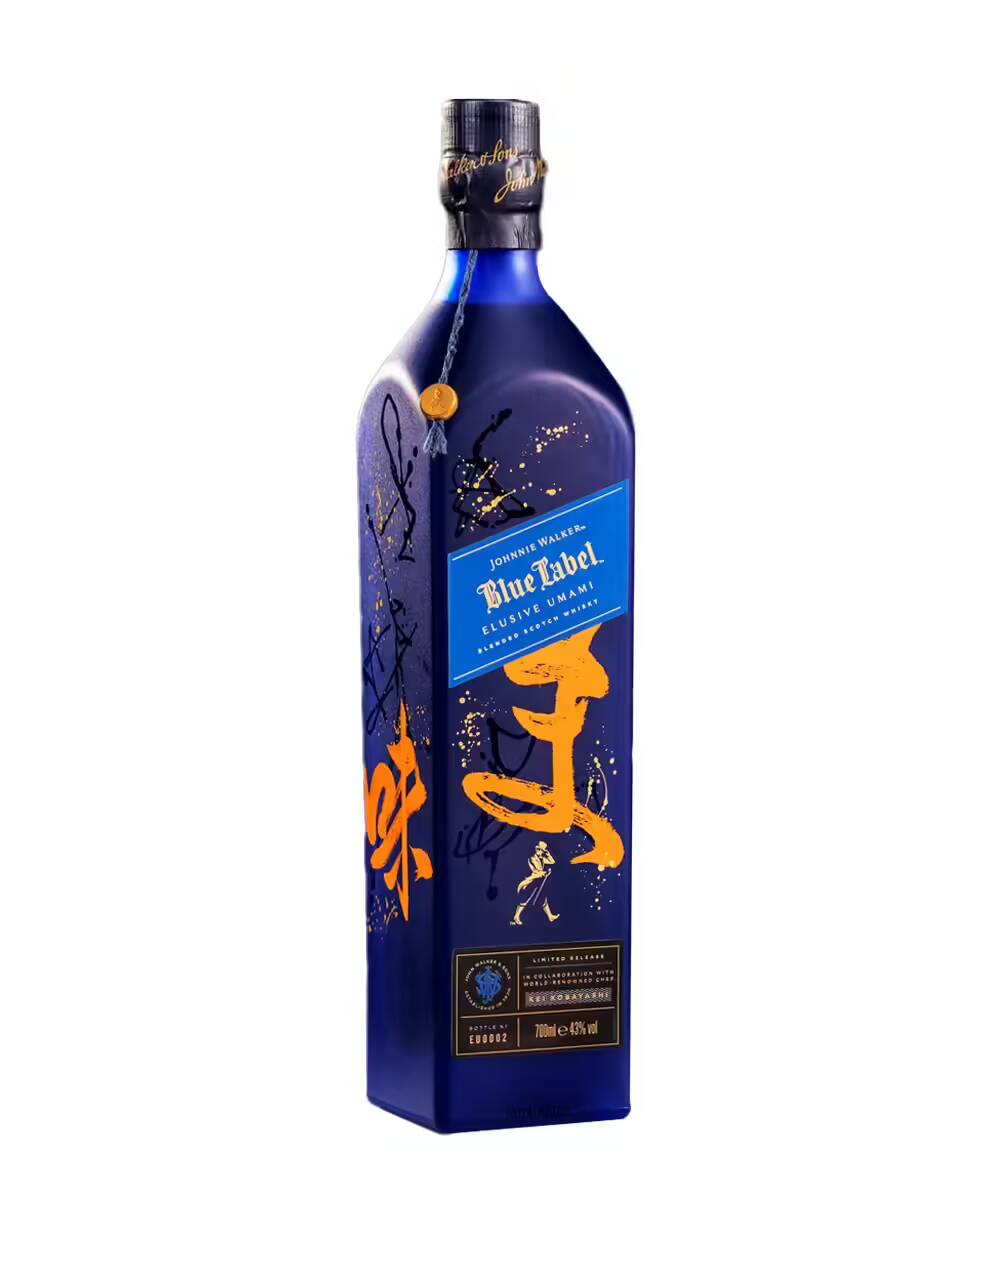 Johnnie Walker Blue Label Elusive Umami Limited Release Kei Kobayashi Whisky